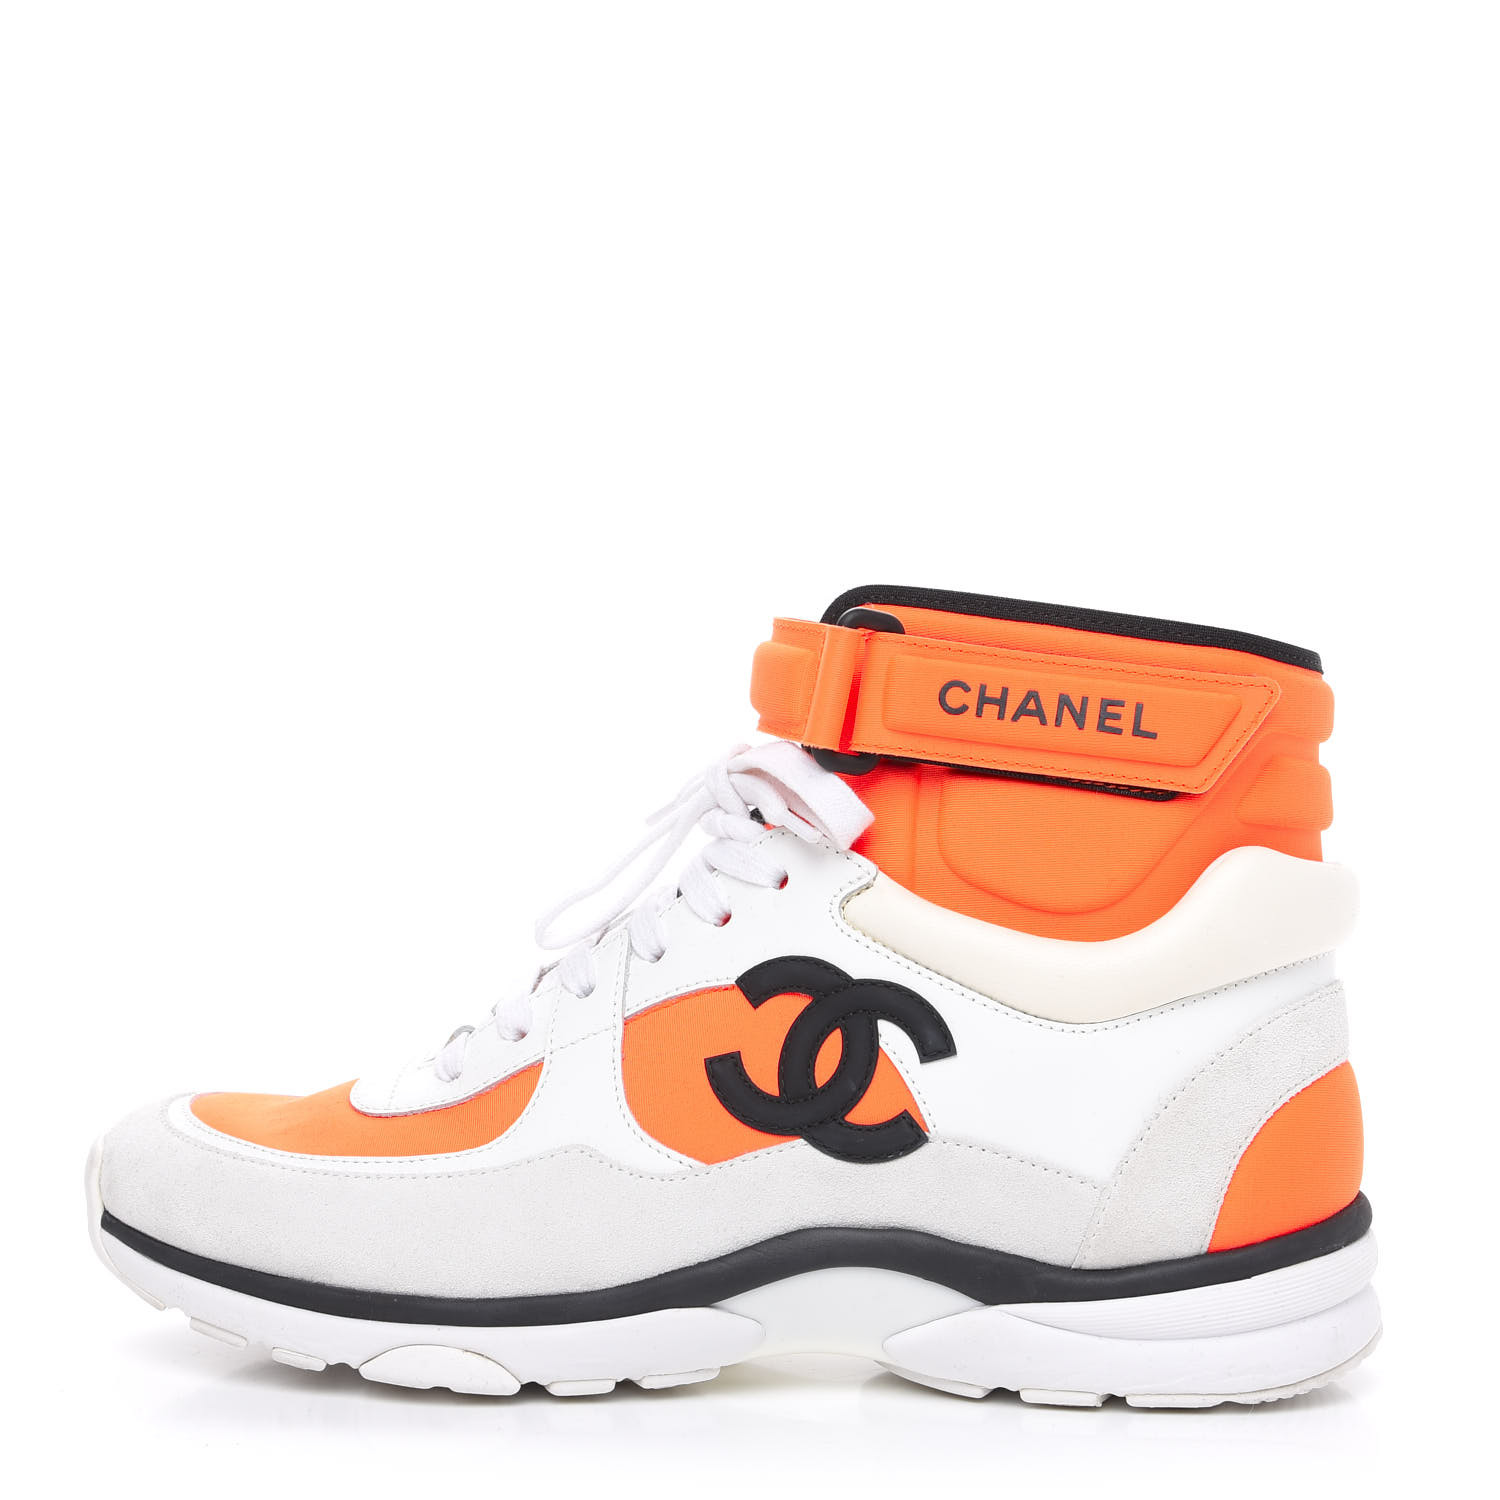 chanel sneakers orange